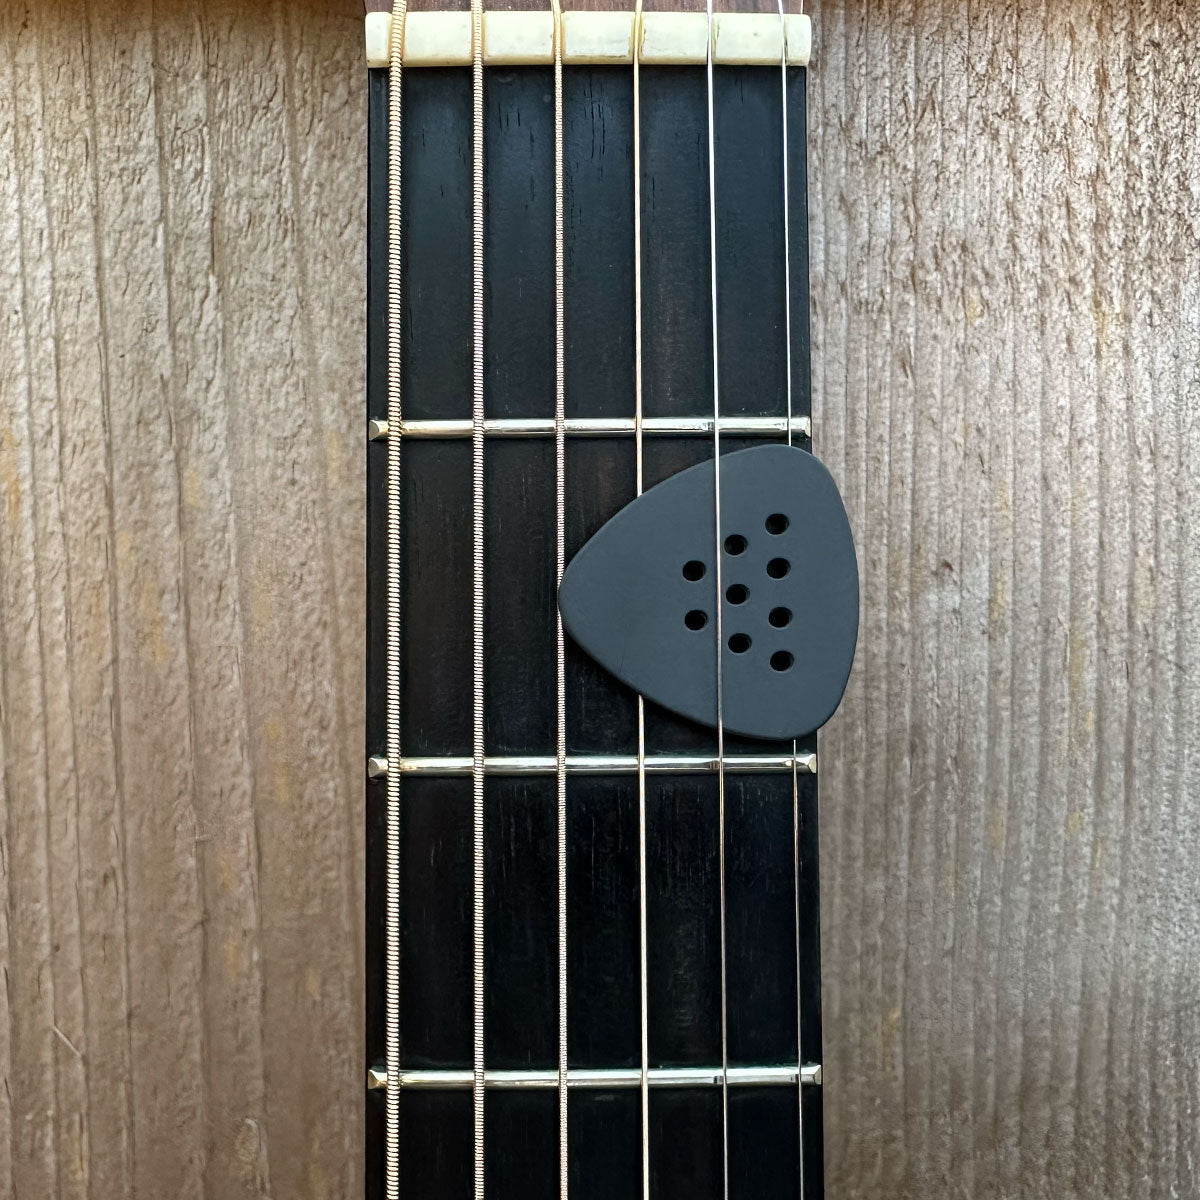 Woodtone FlexGrip™ Rounded Teardrop Guitar Pick (3-Pack, Matte Black)